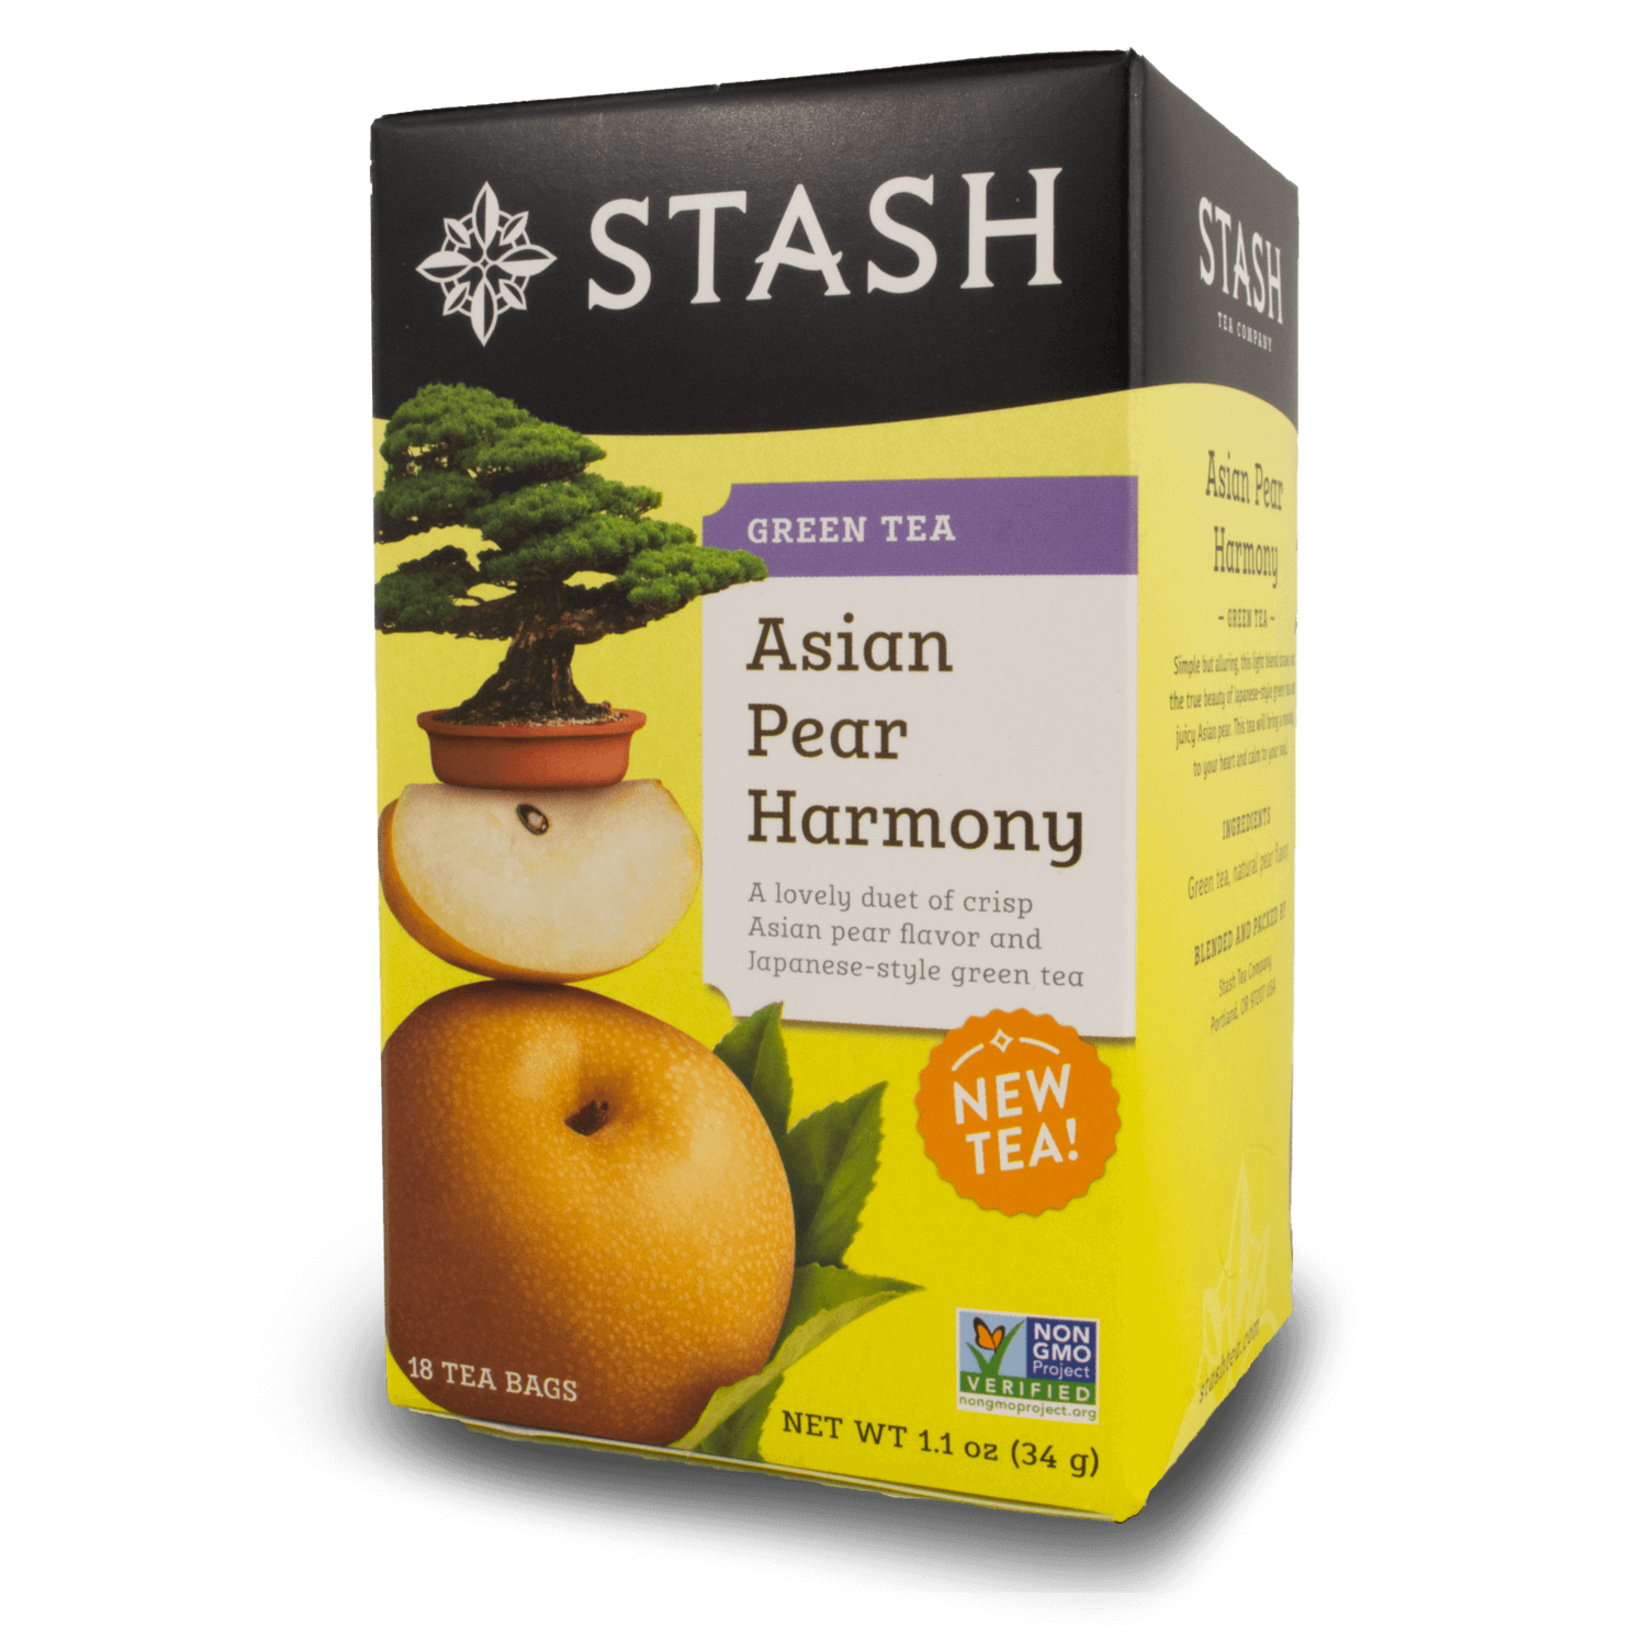 Stash Stash Asian Pear Harmony Tea 30g